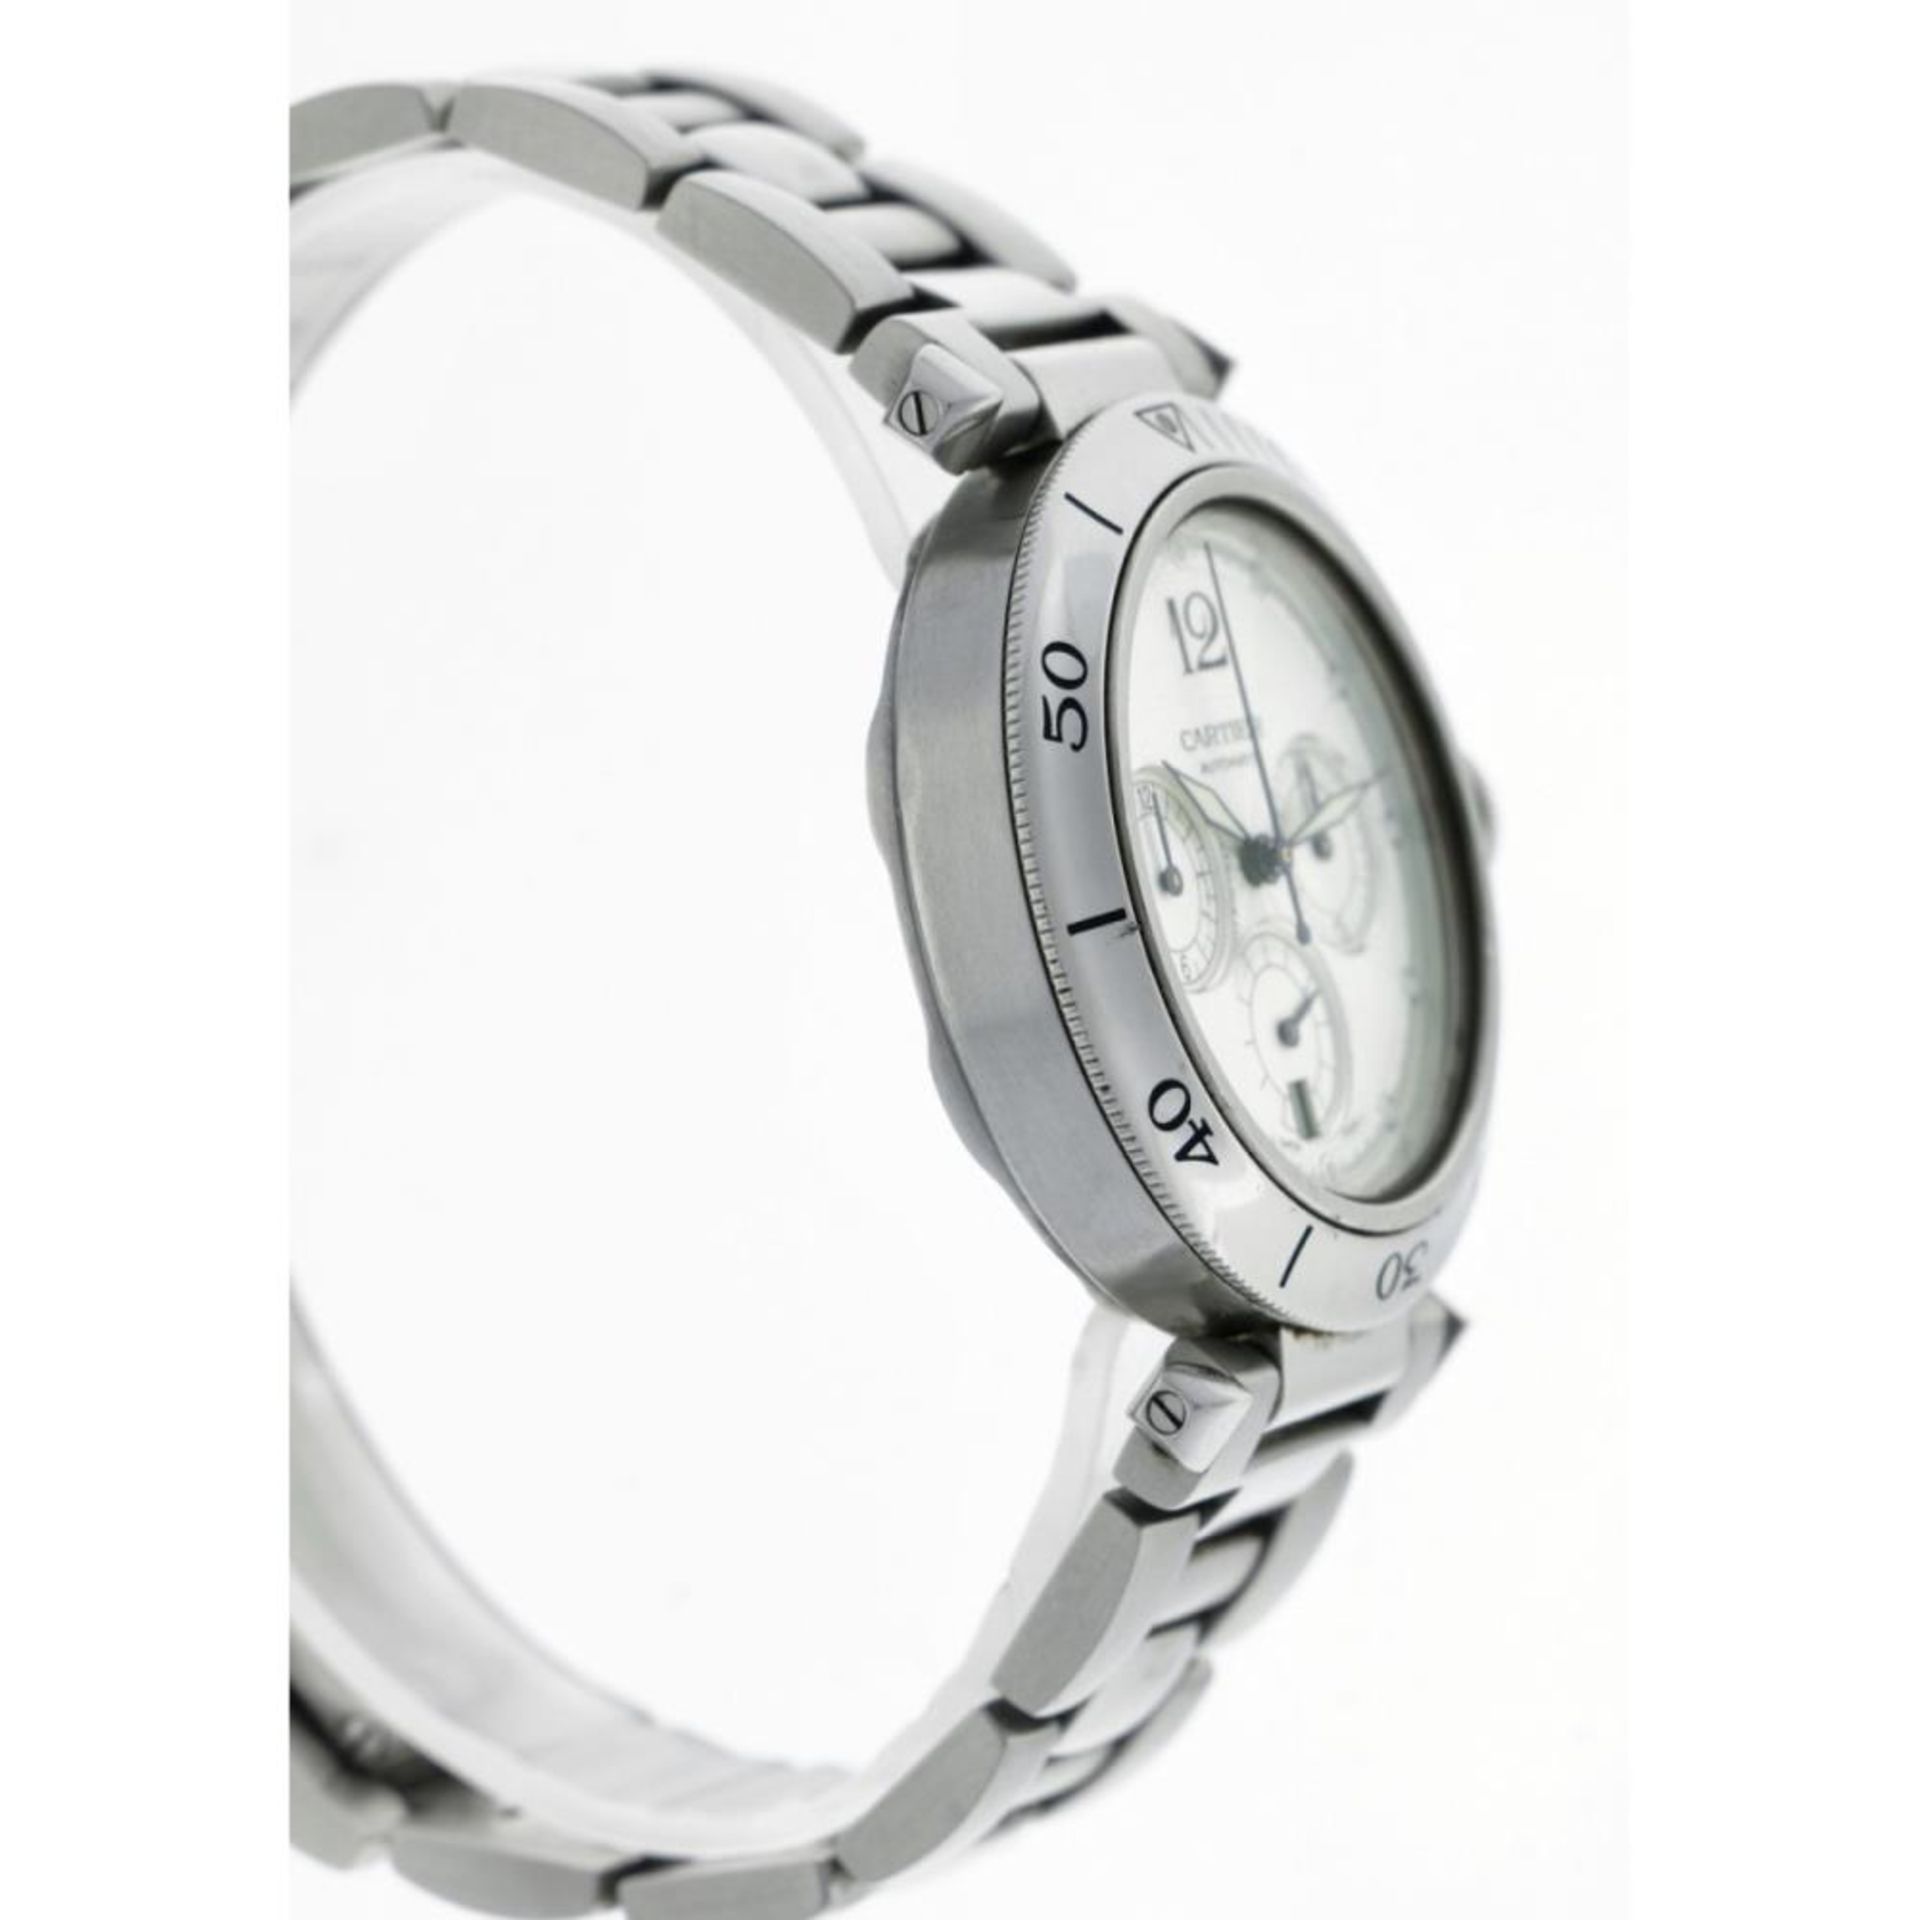 Cartier Pasha 2113 - Men's watch - approx. 2010. - Image 8 of 12